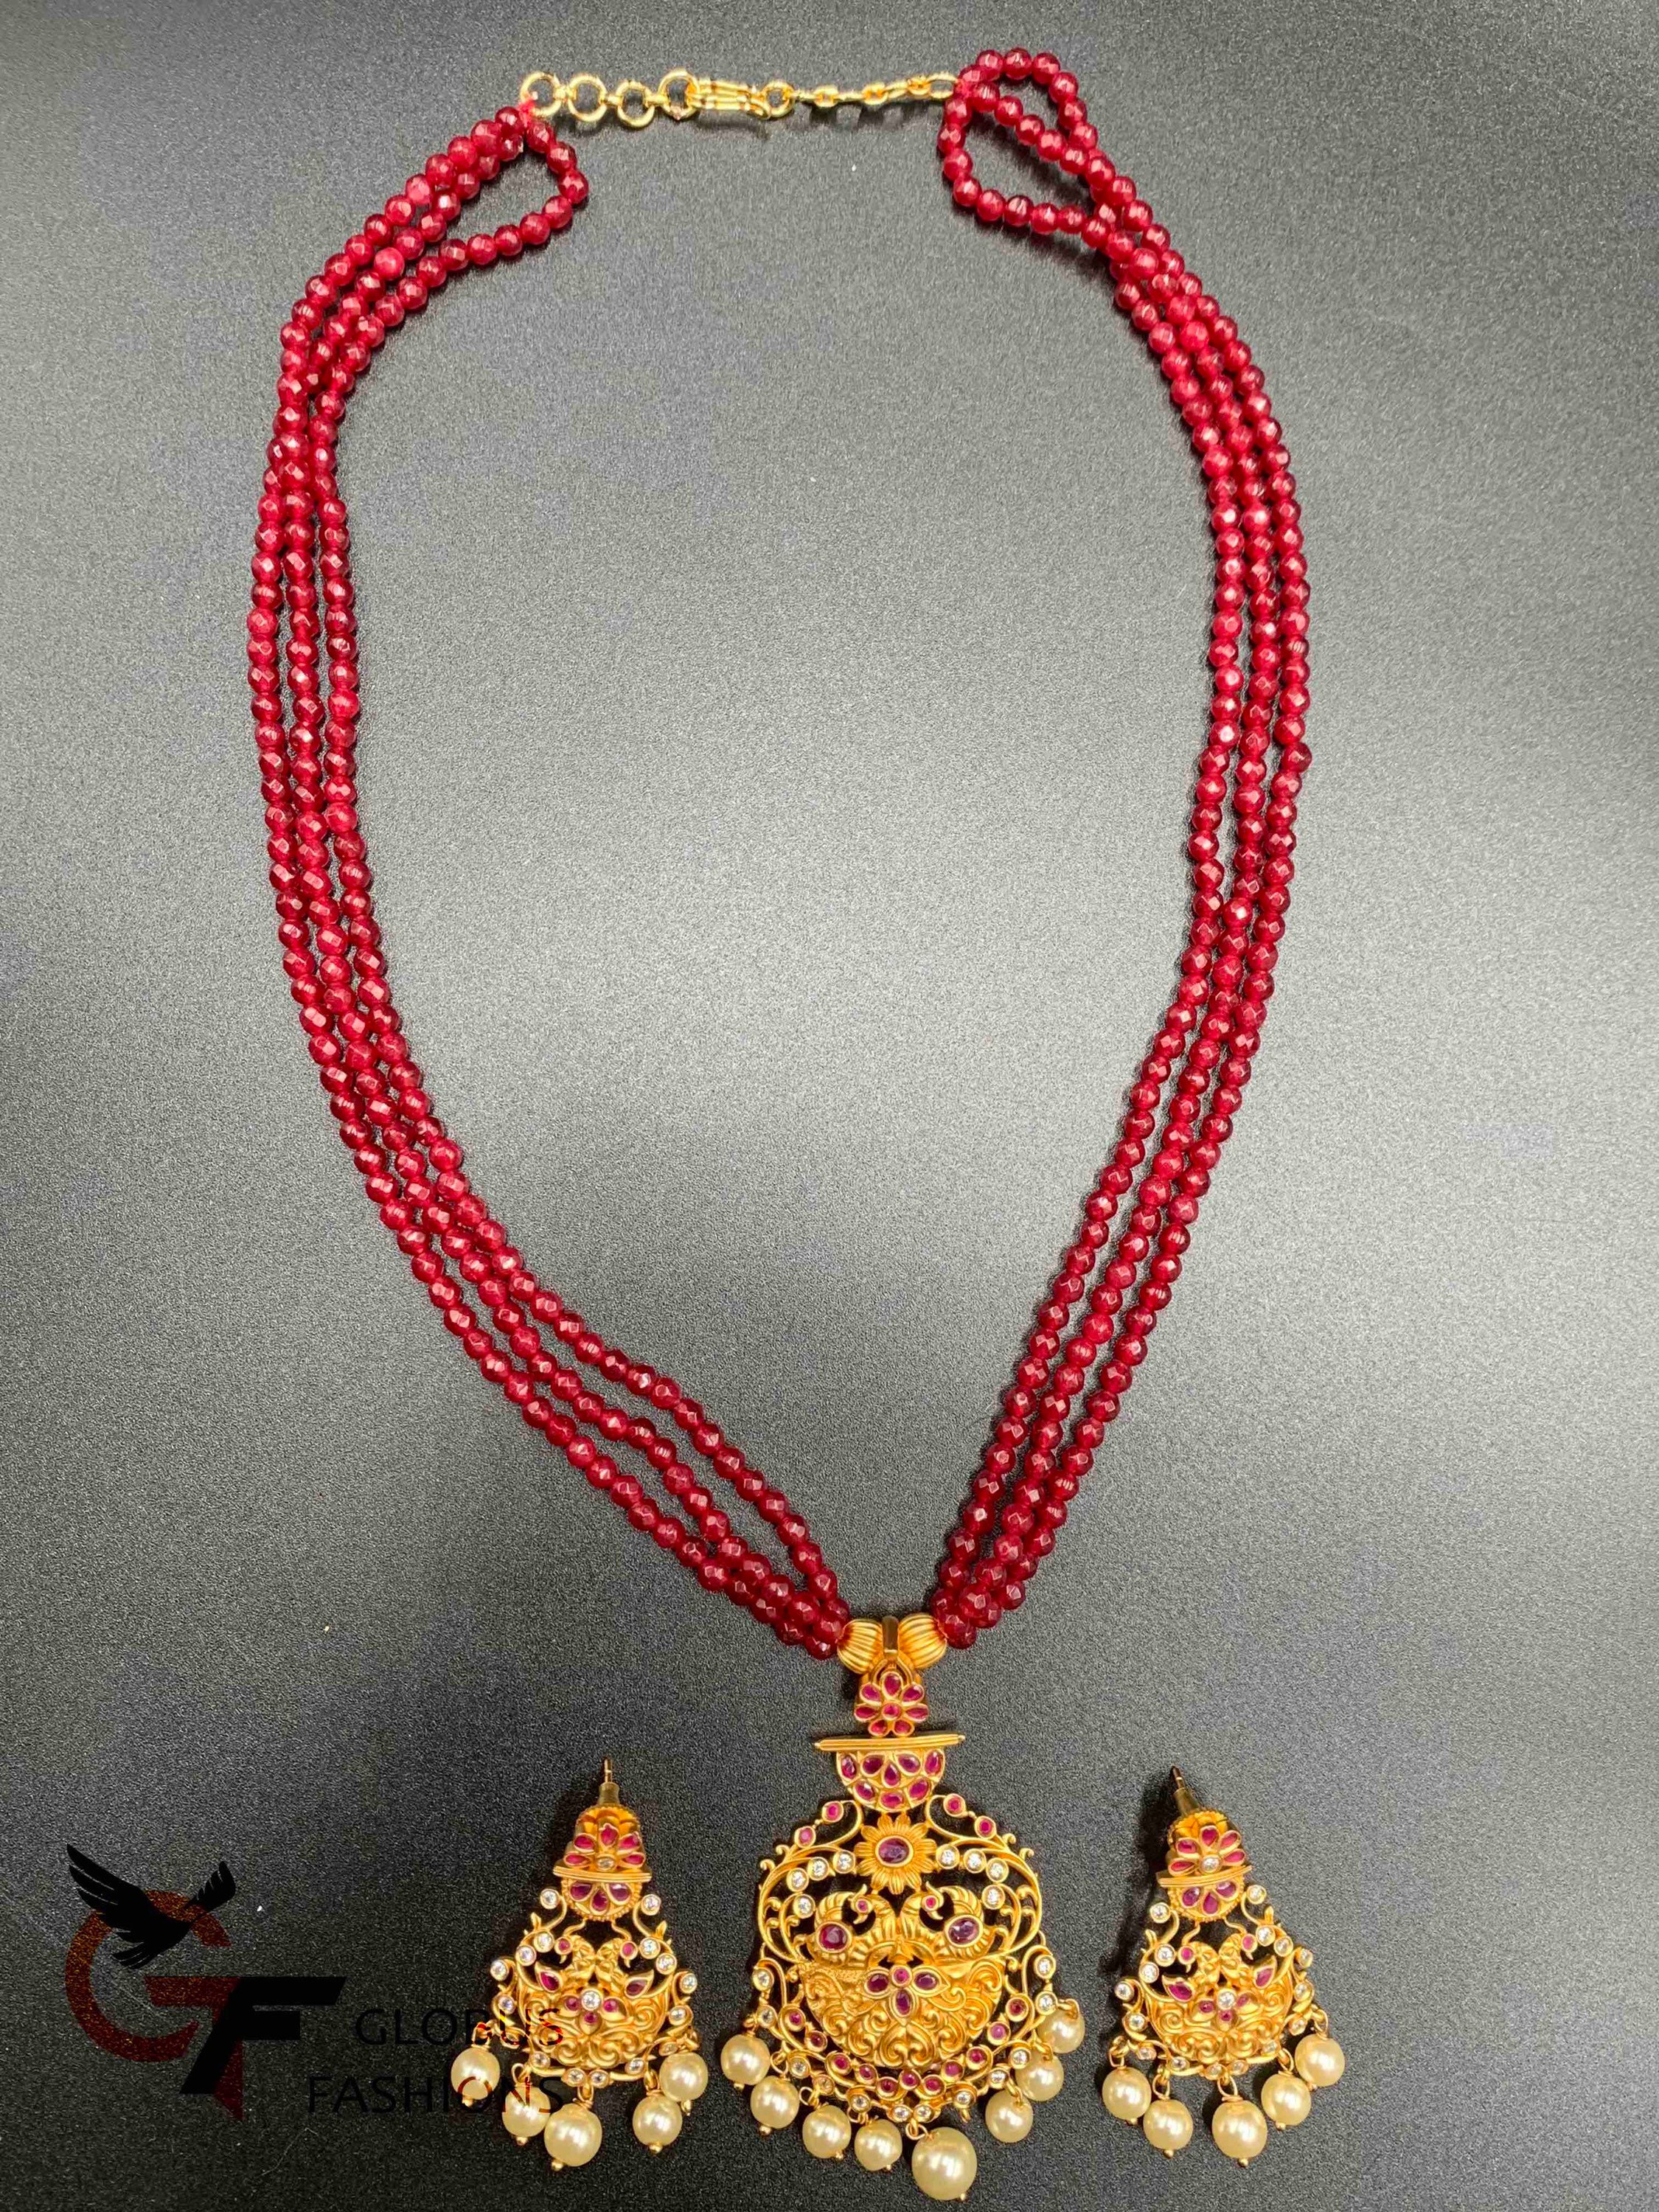 Summer necklaces.✨✨✨ #authentic #repurposed #jewelryaddict